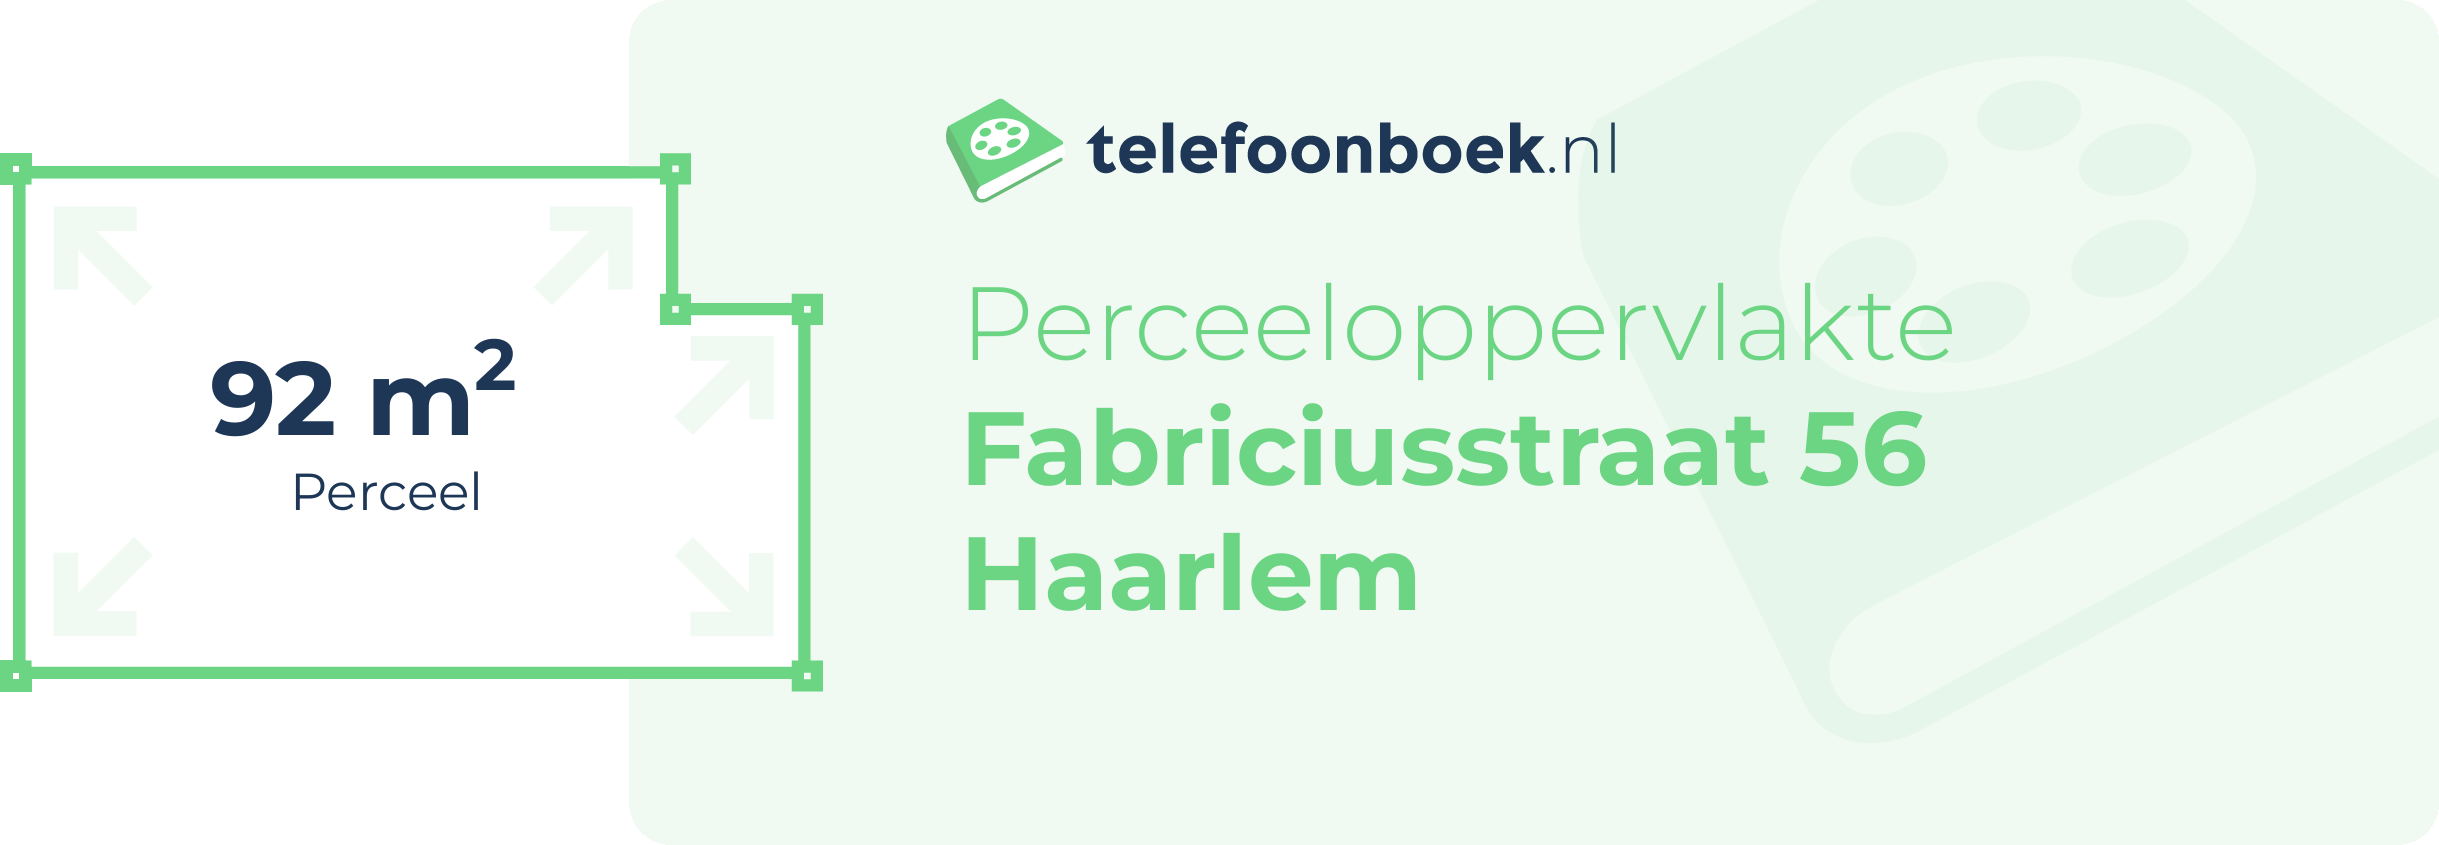 Perceeloppervlakte Fabriciusstraat 56 Haarlem